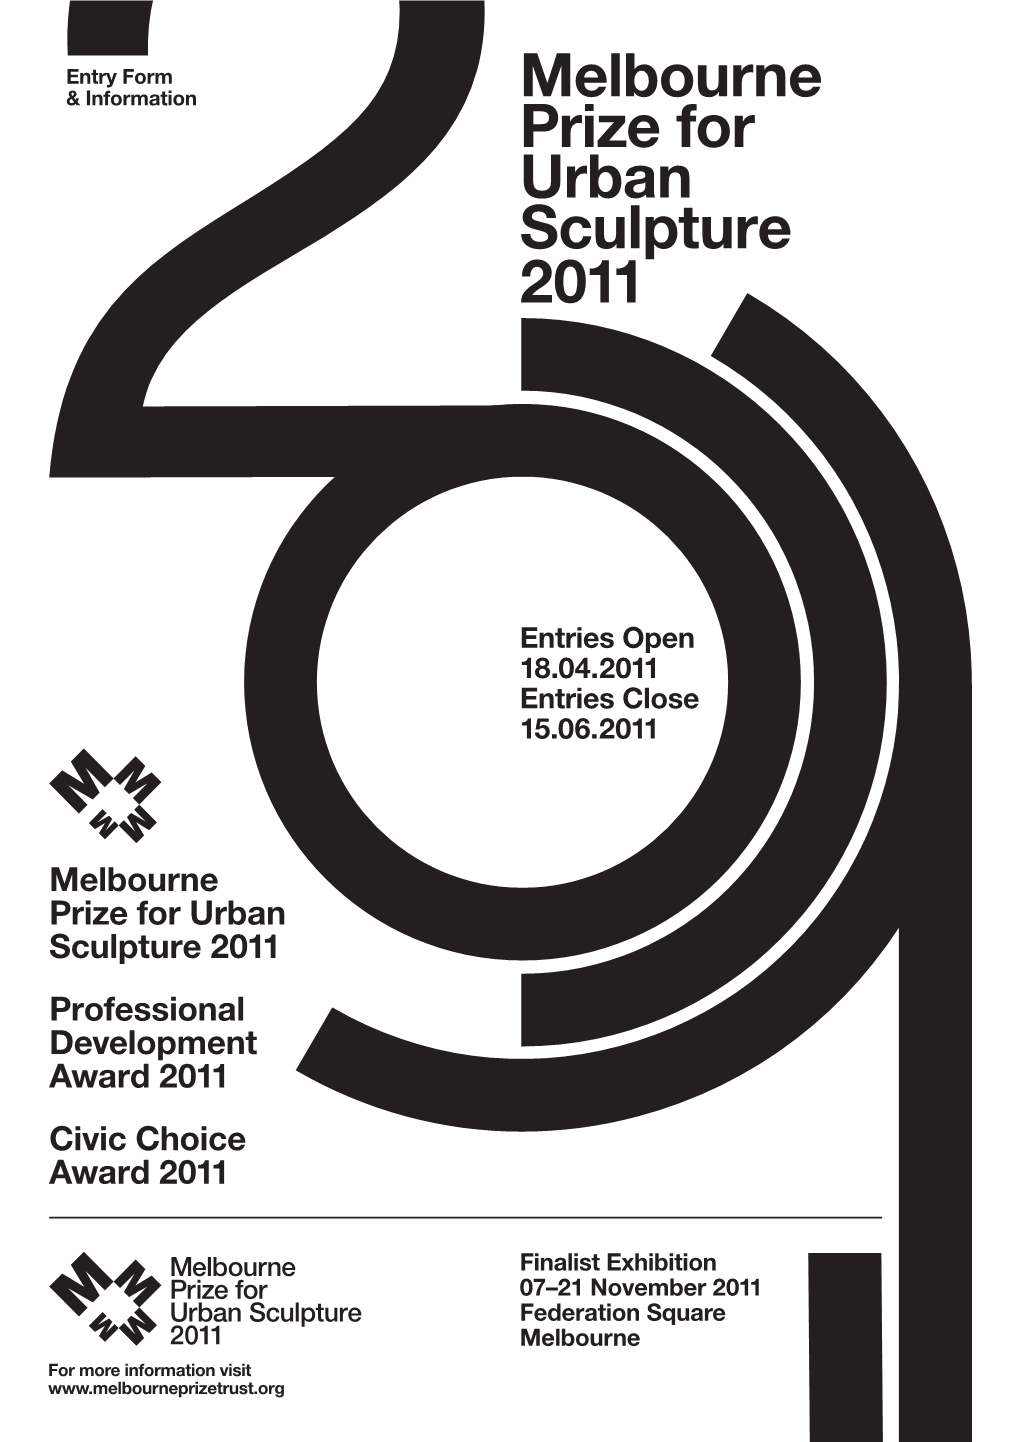 Melbourne Prize for Urban Sculpture 2011